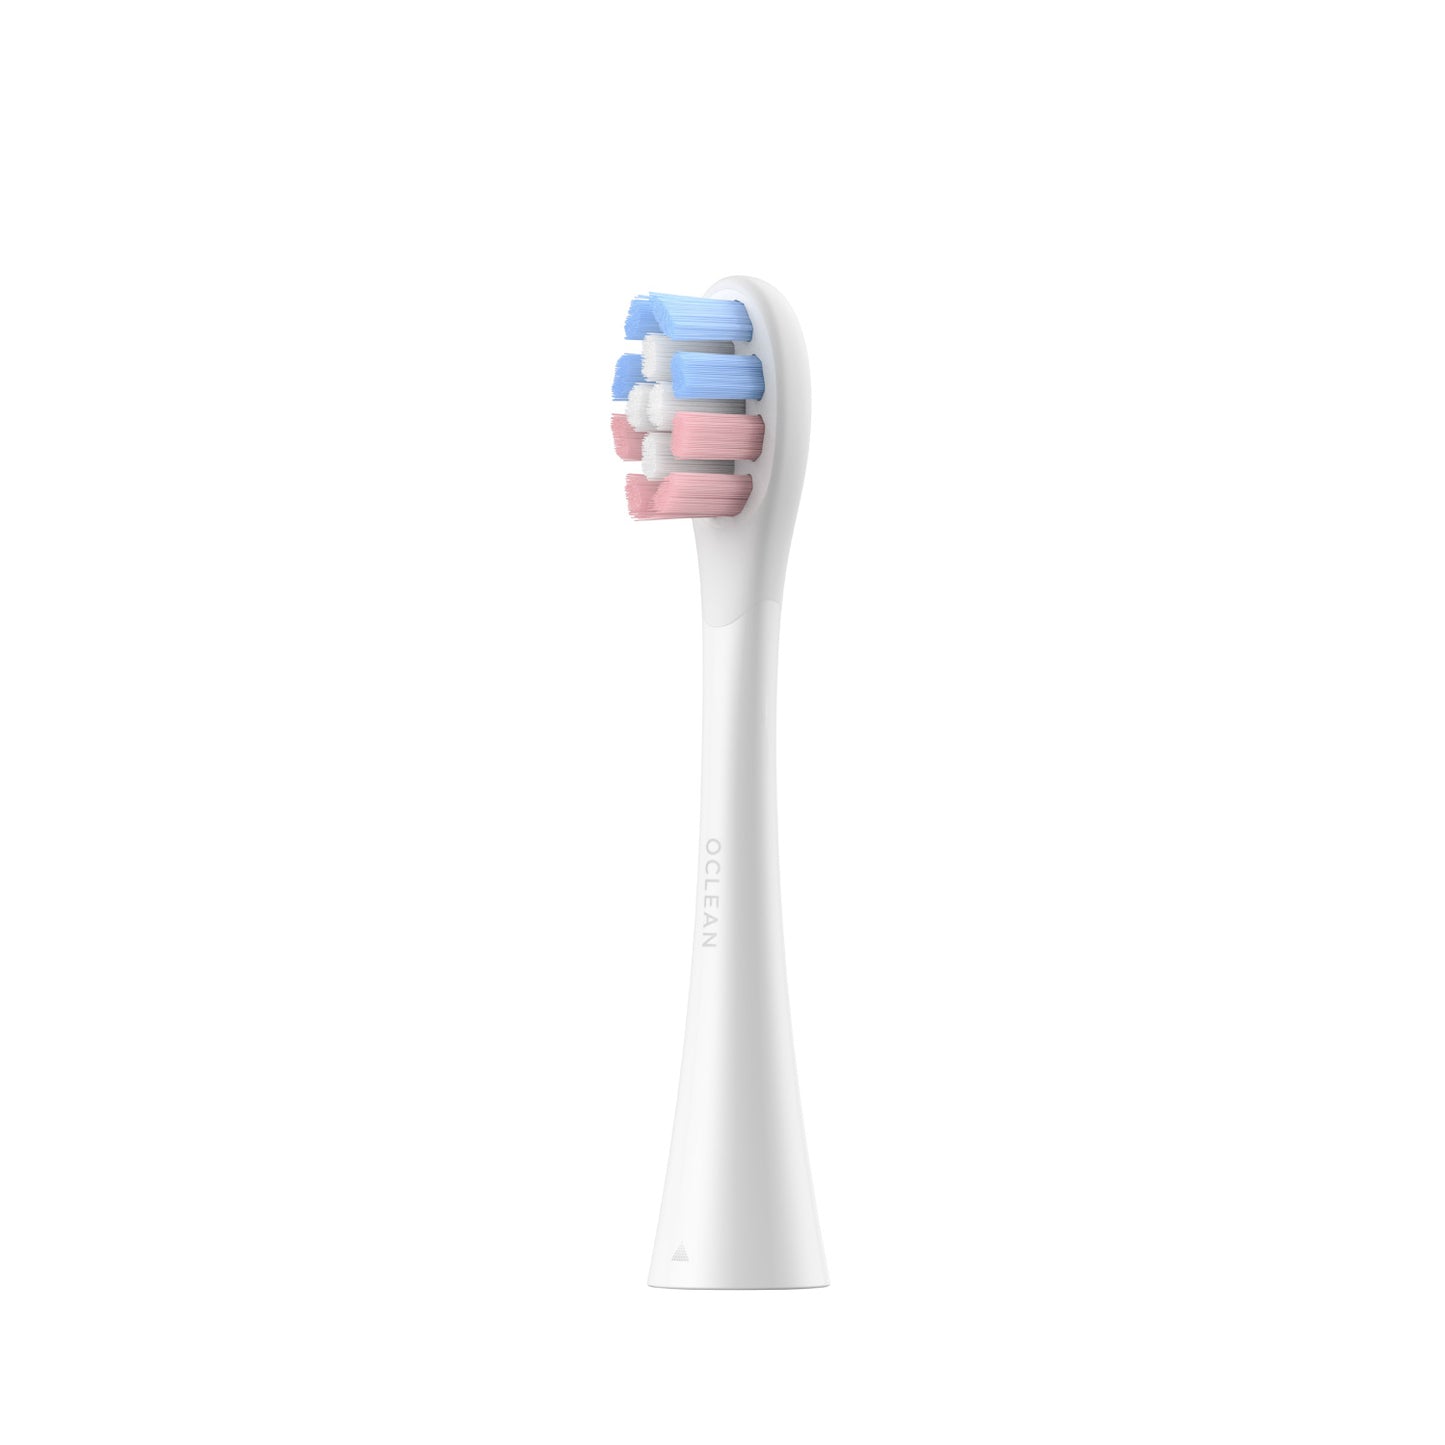 Oclean Brush Heads Refills Toothbrush Replacement Heads Kids P3K1 Oclean Official